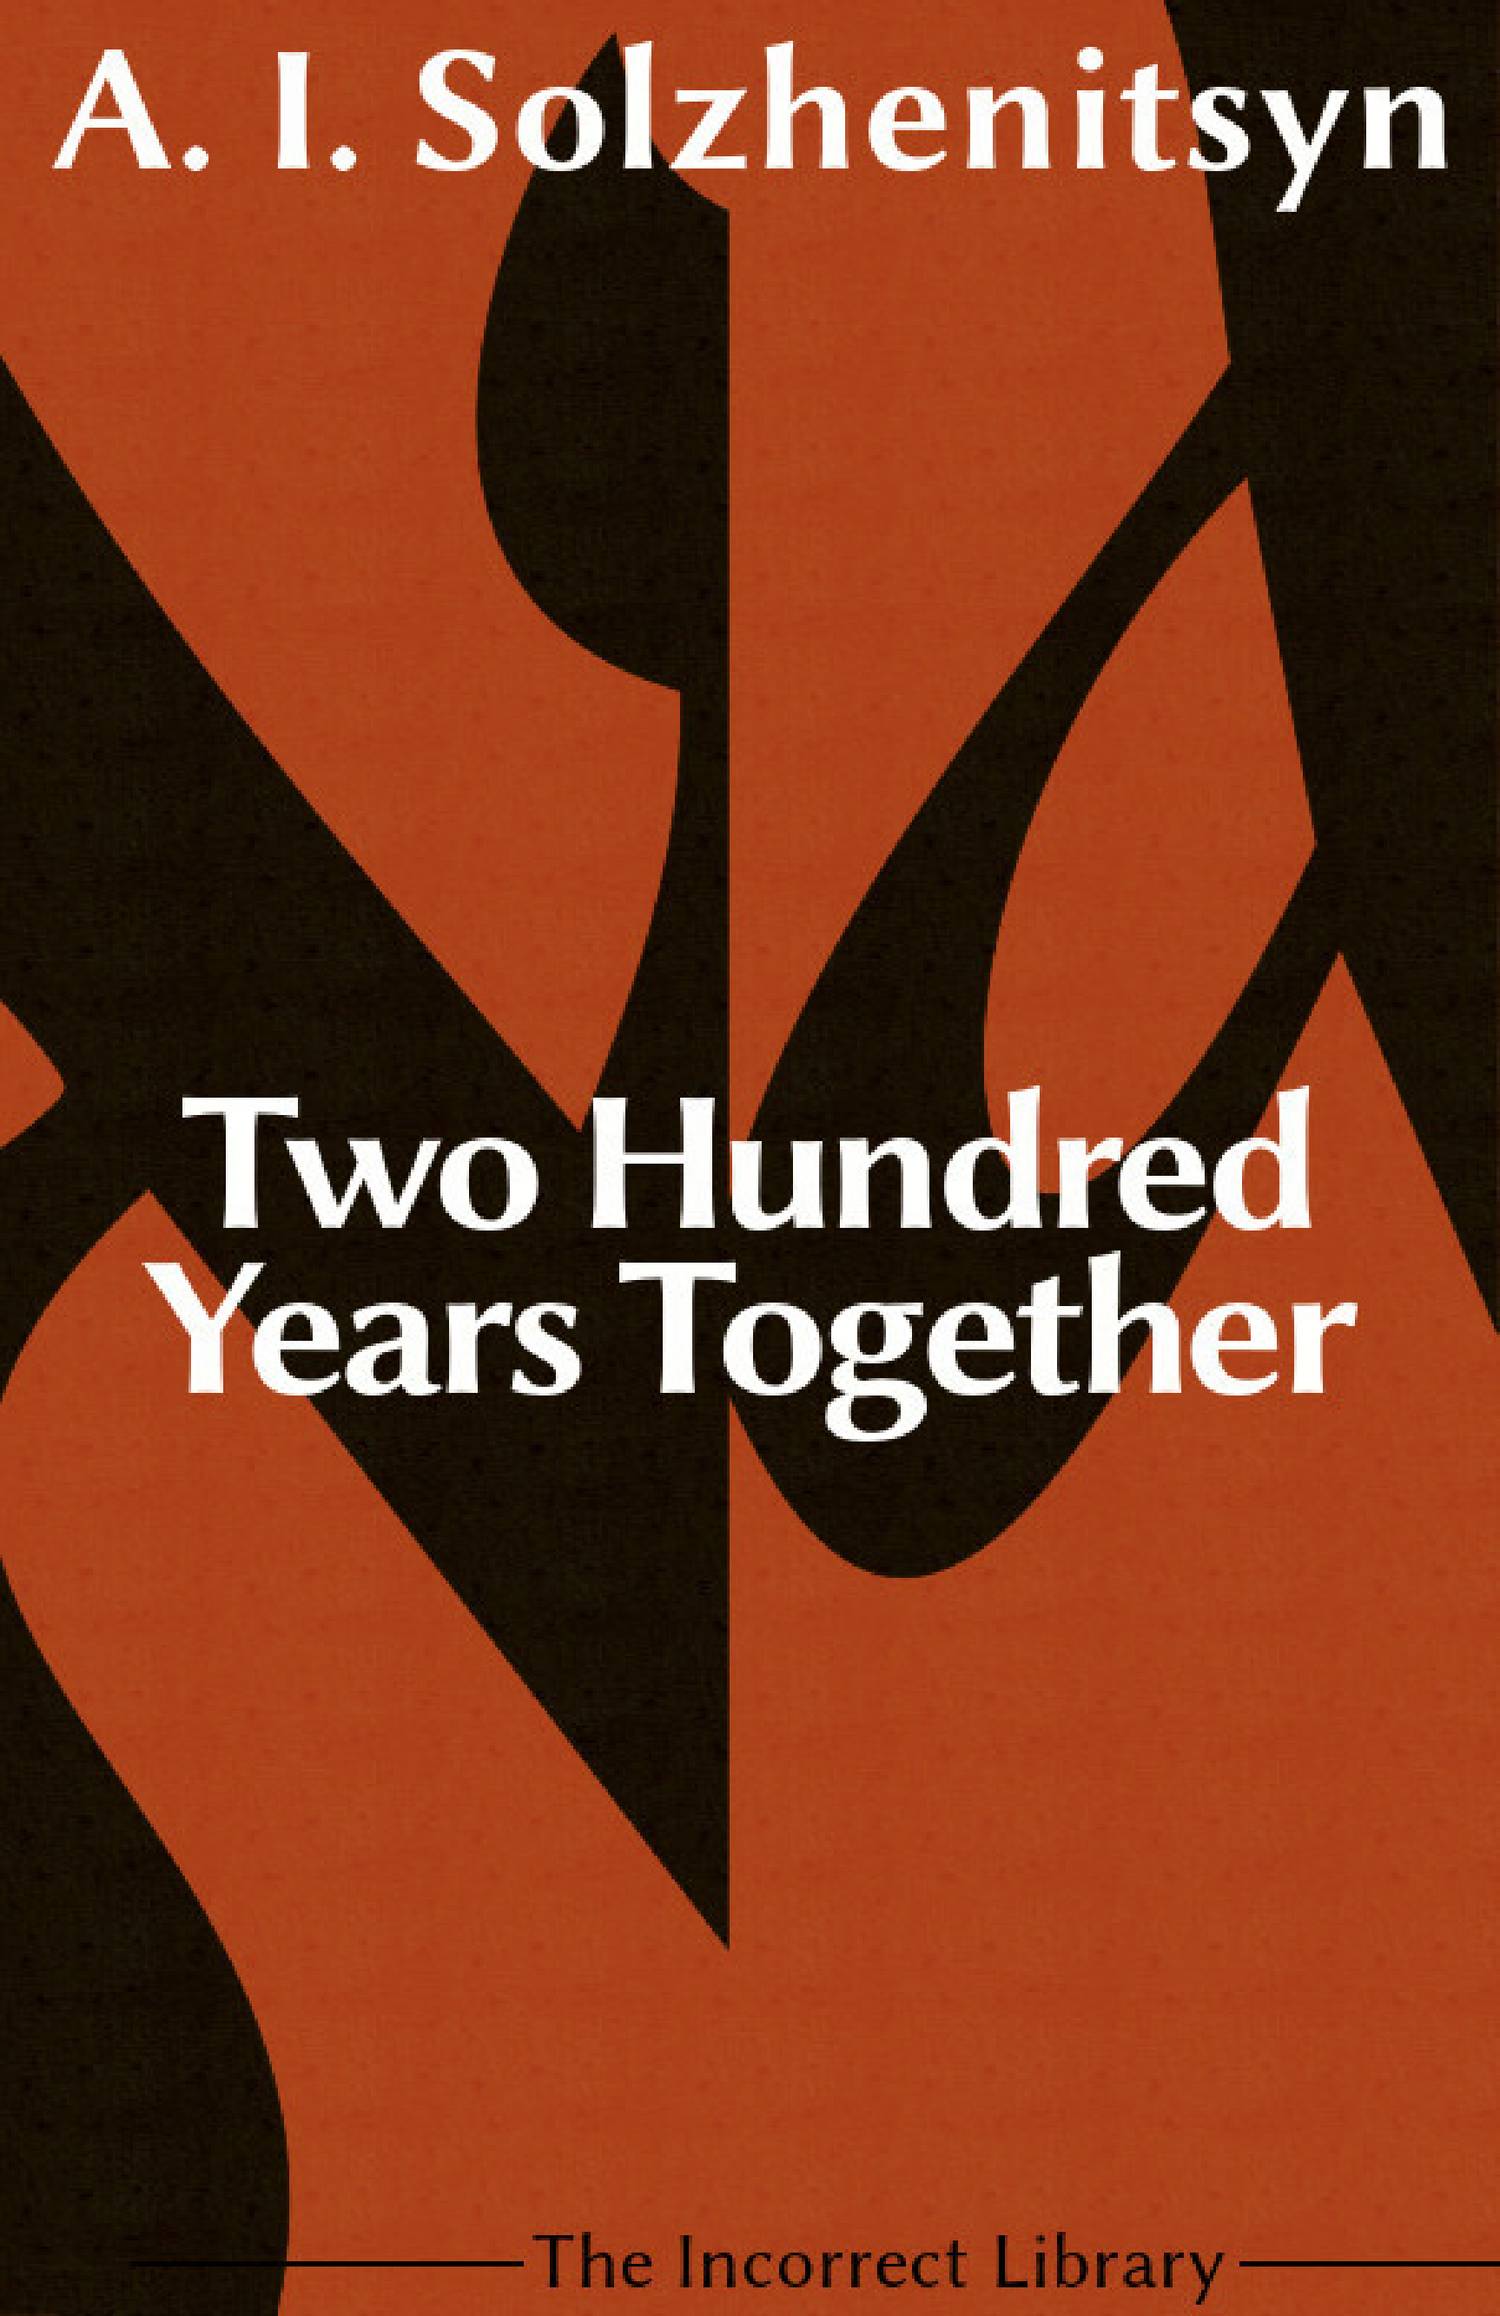 200 Years Together - byzantine